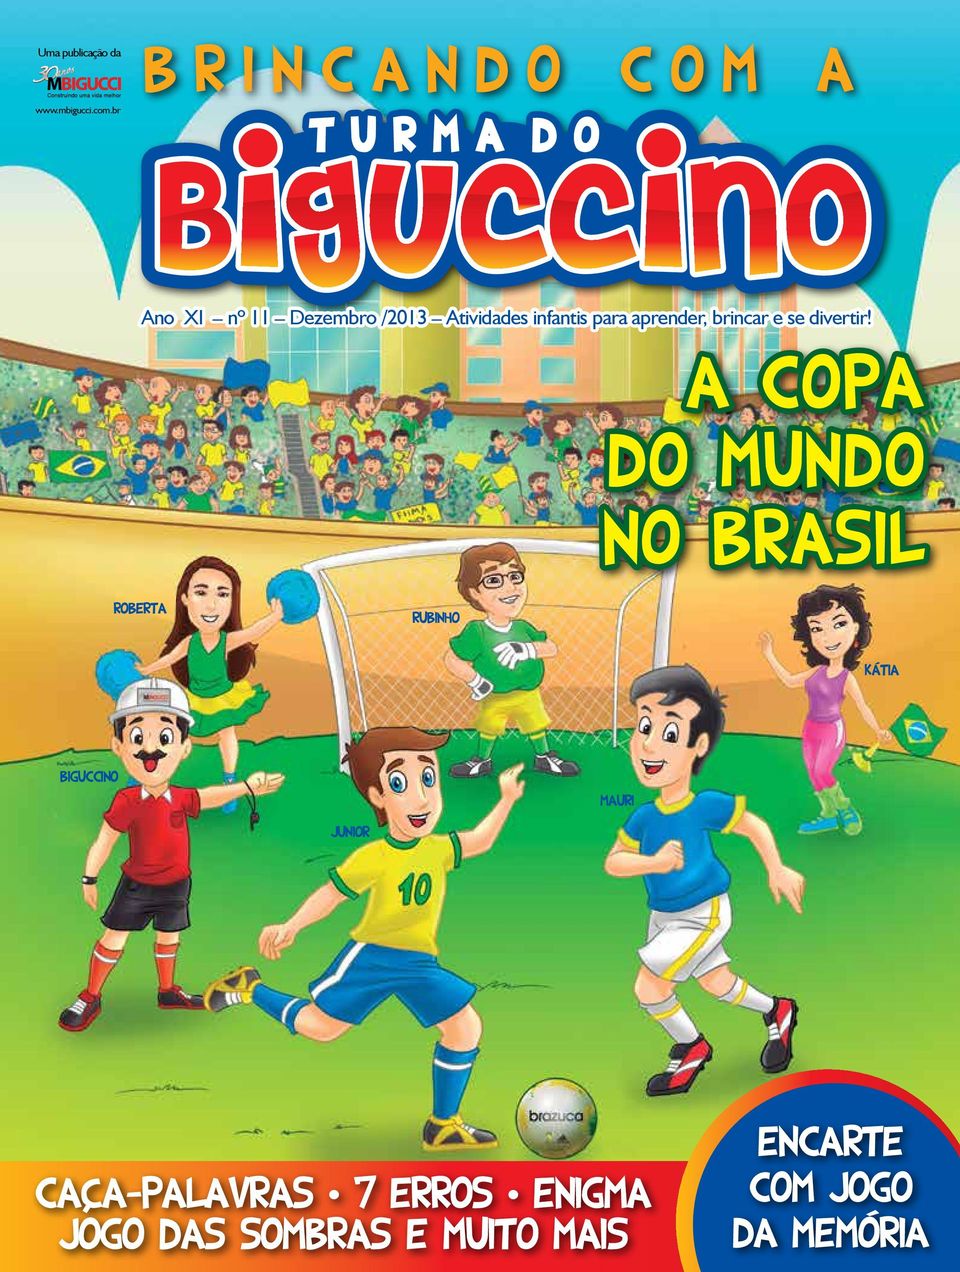 A Copa do Mundo no Brasil Roberta Rubinho Kátia Biguccino